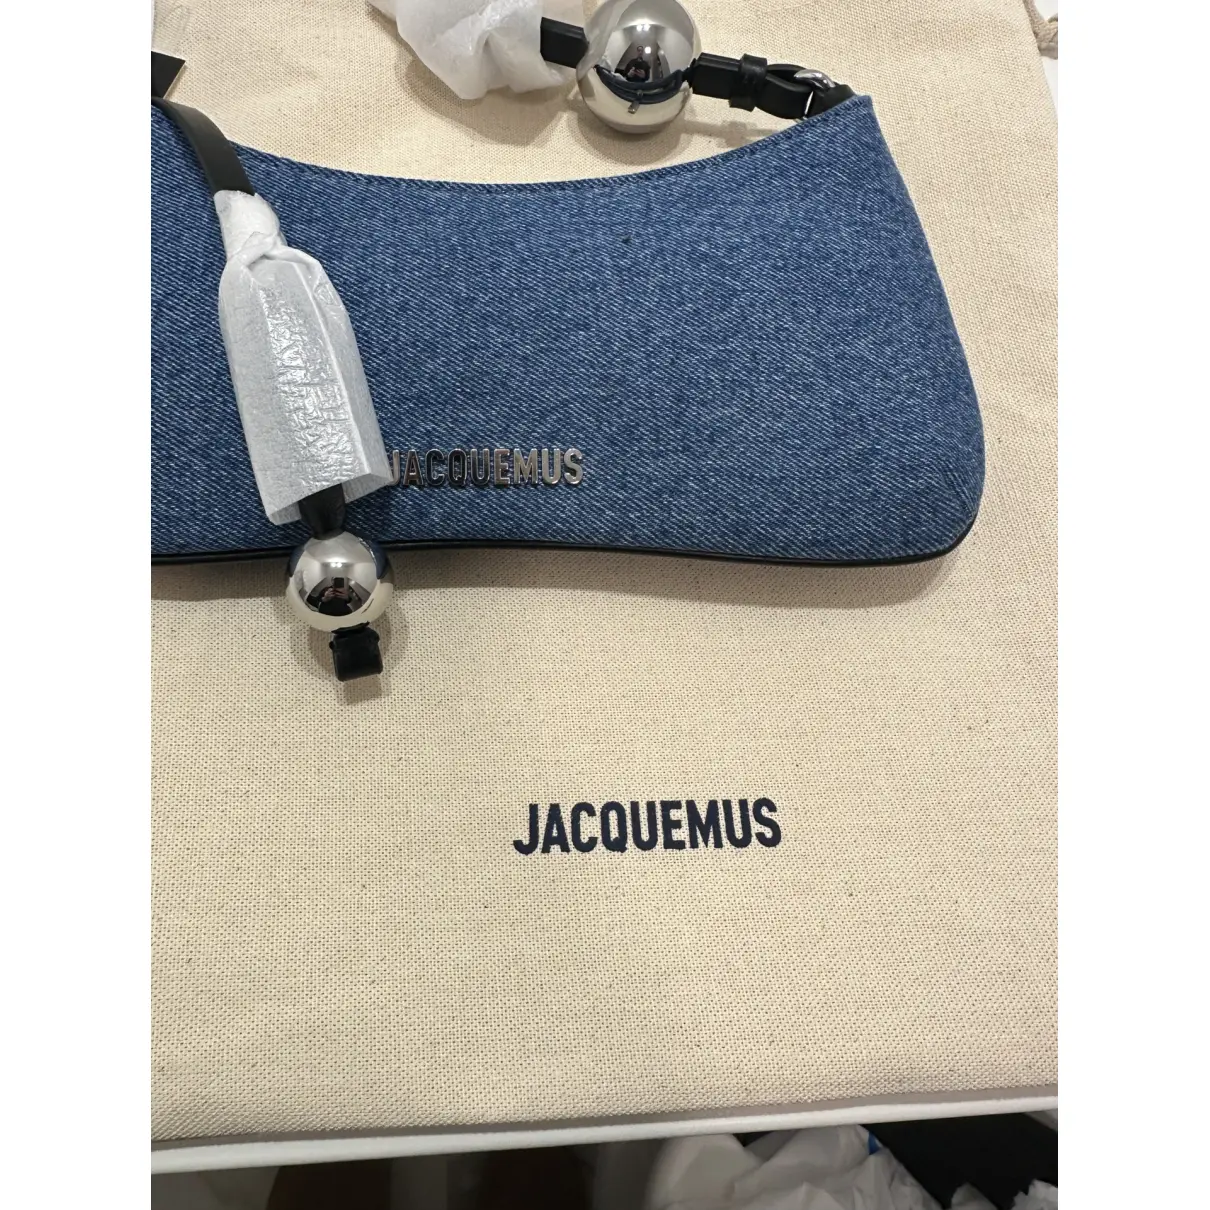 Buy Jacquemus Cloth clutch bag online